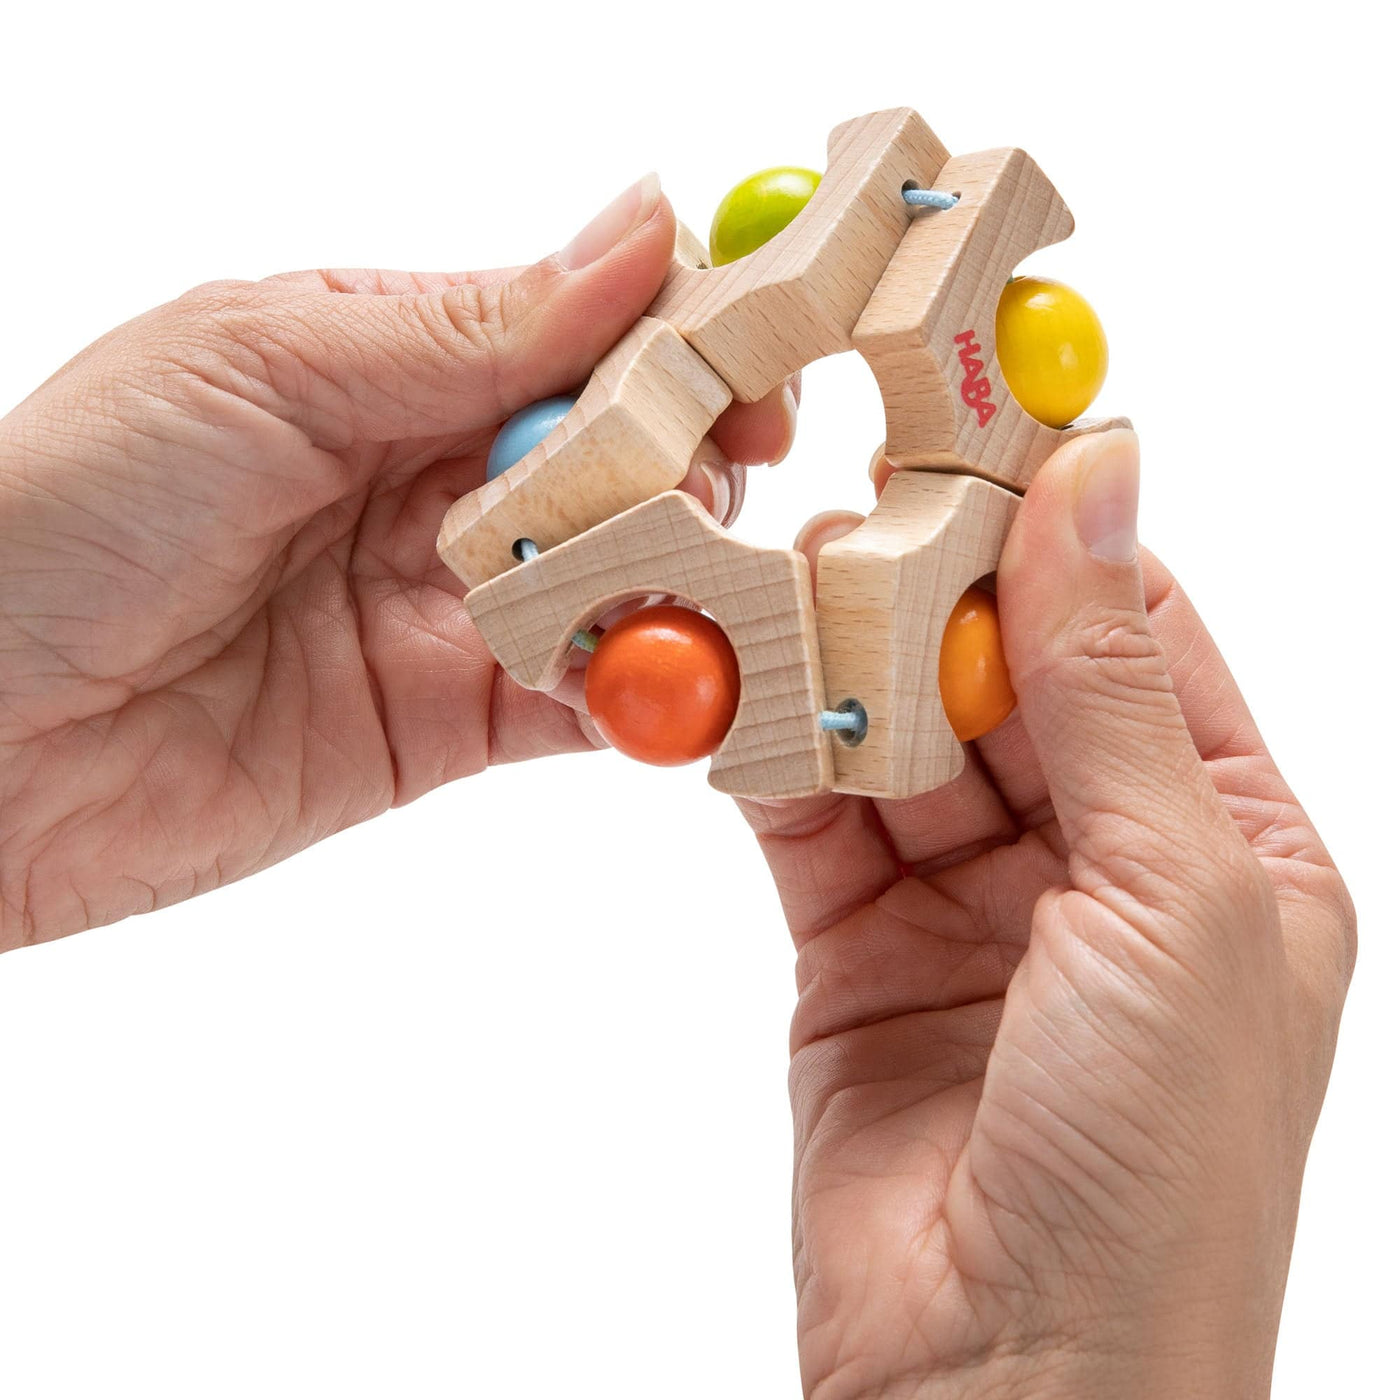 Ball Wheel Clutching Toy - HABA USA